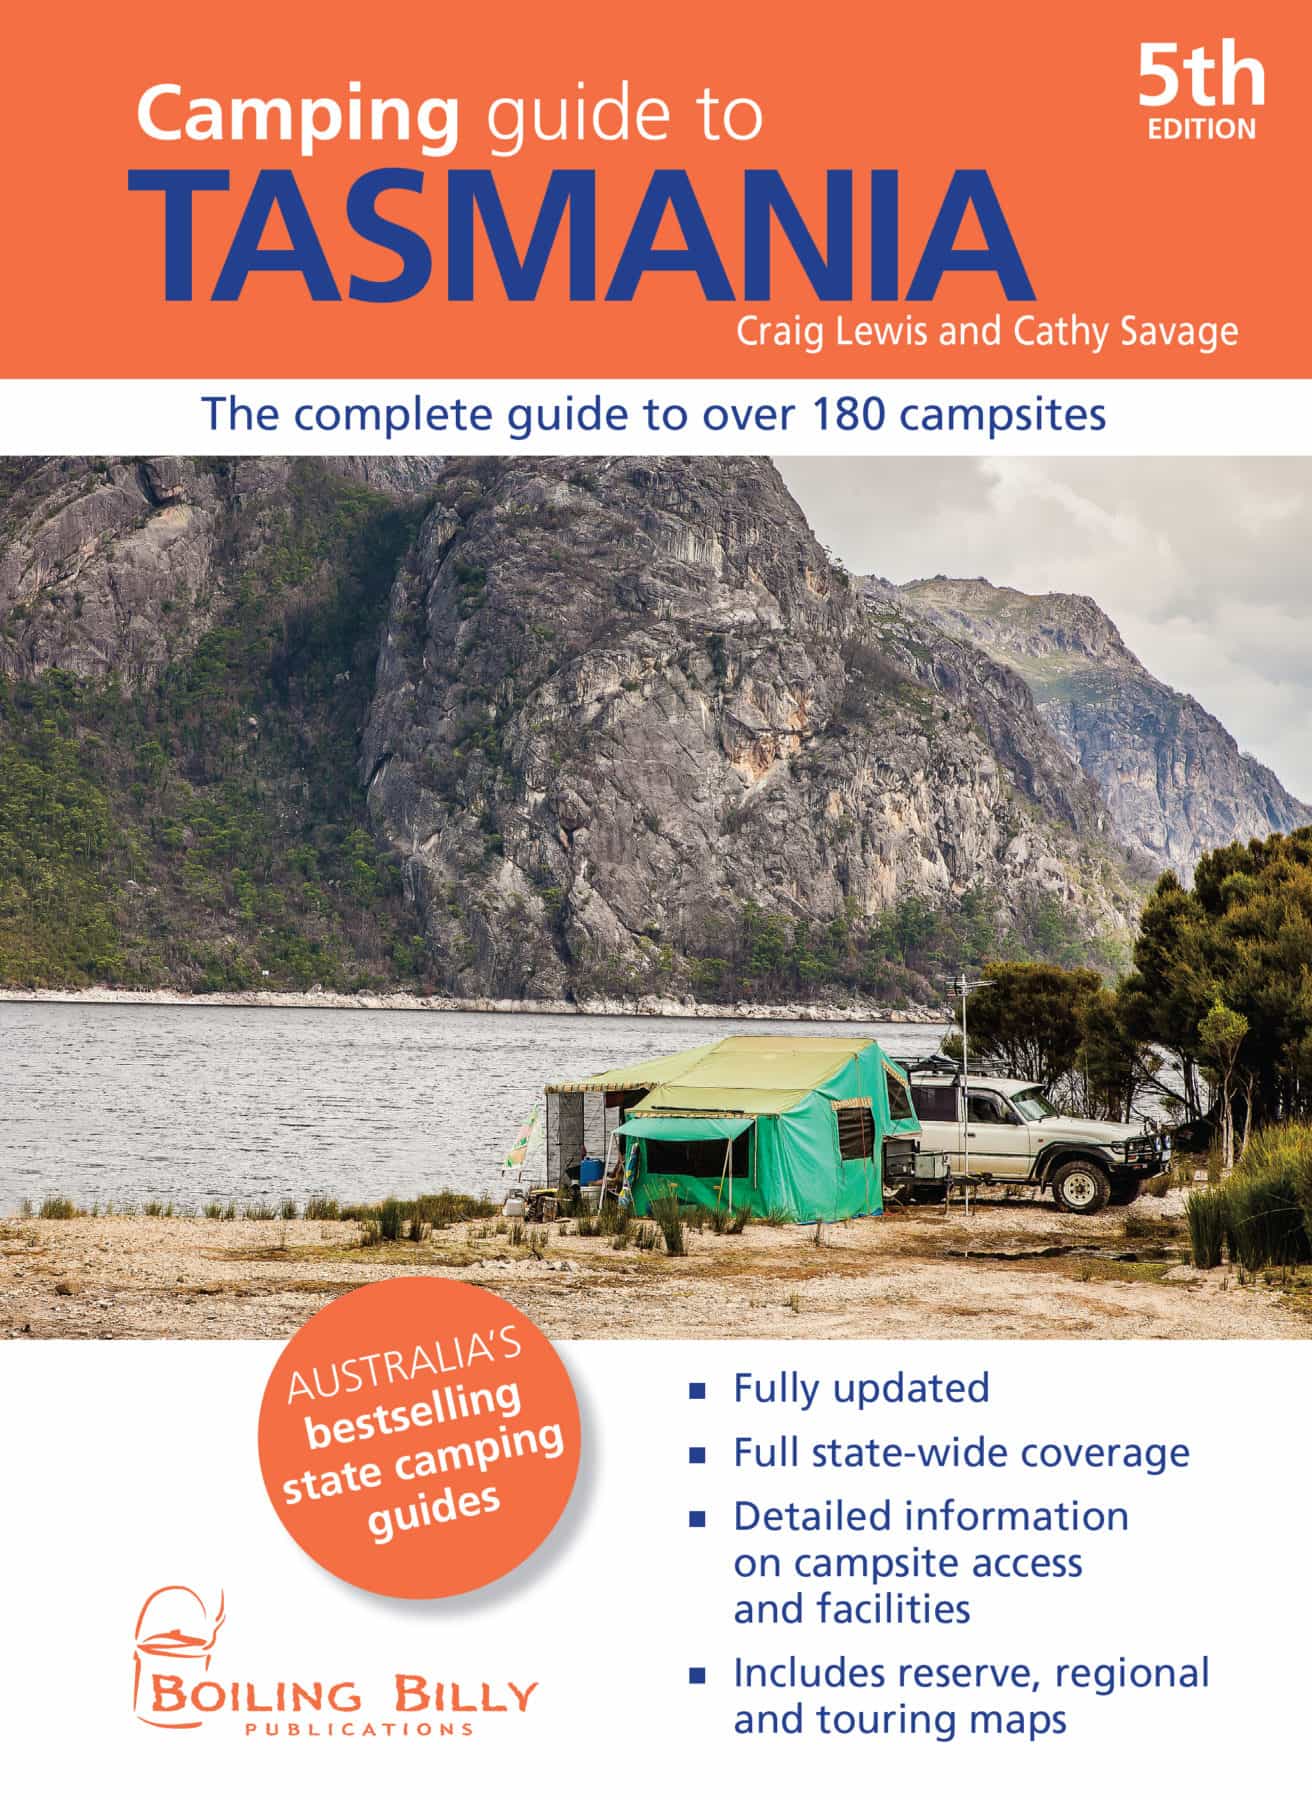 travel to tasmania covid